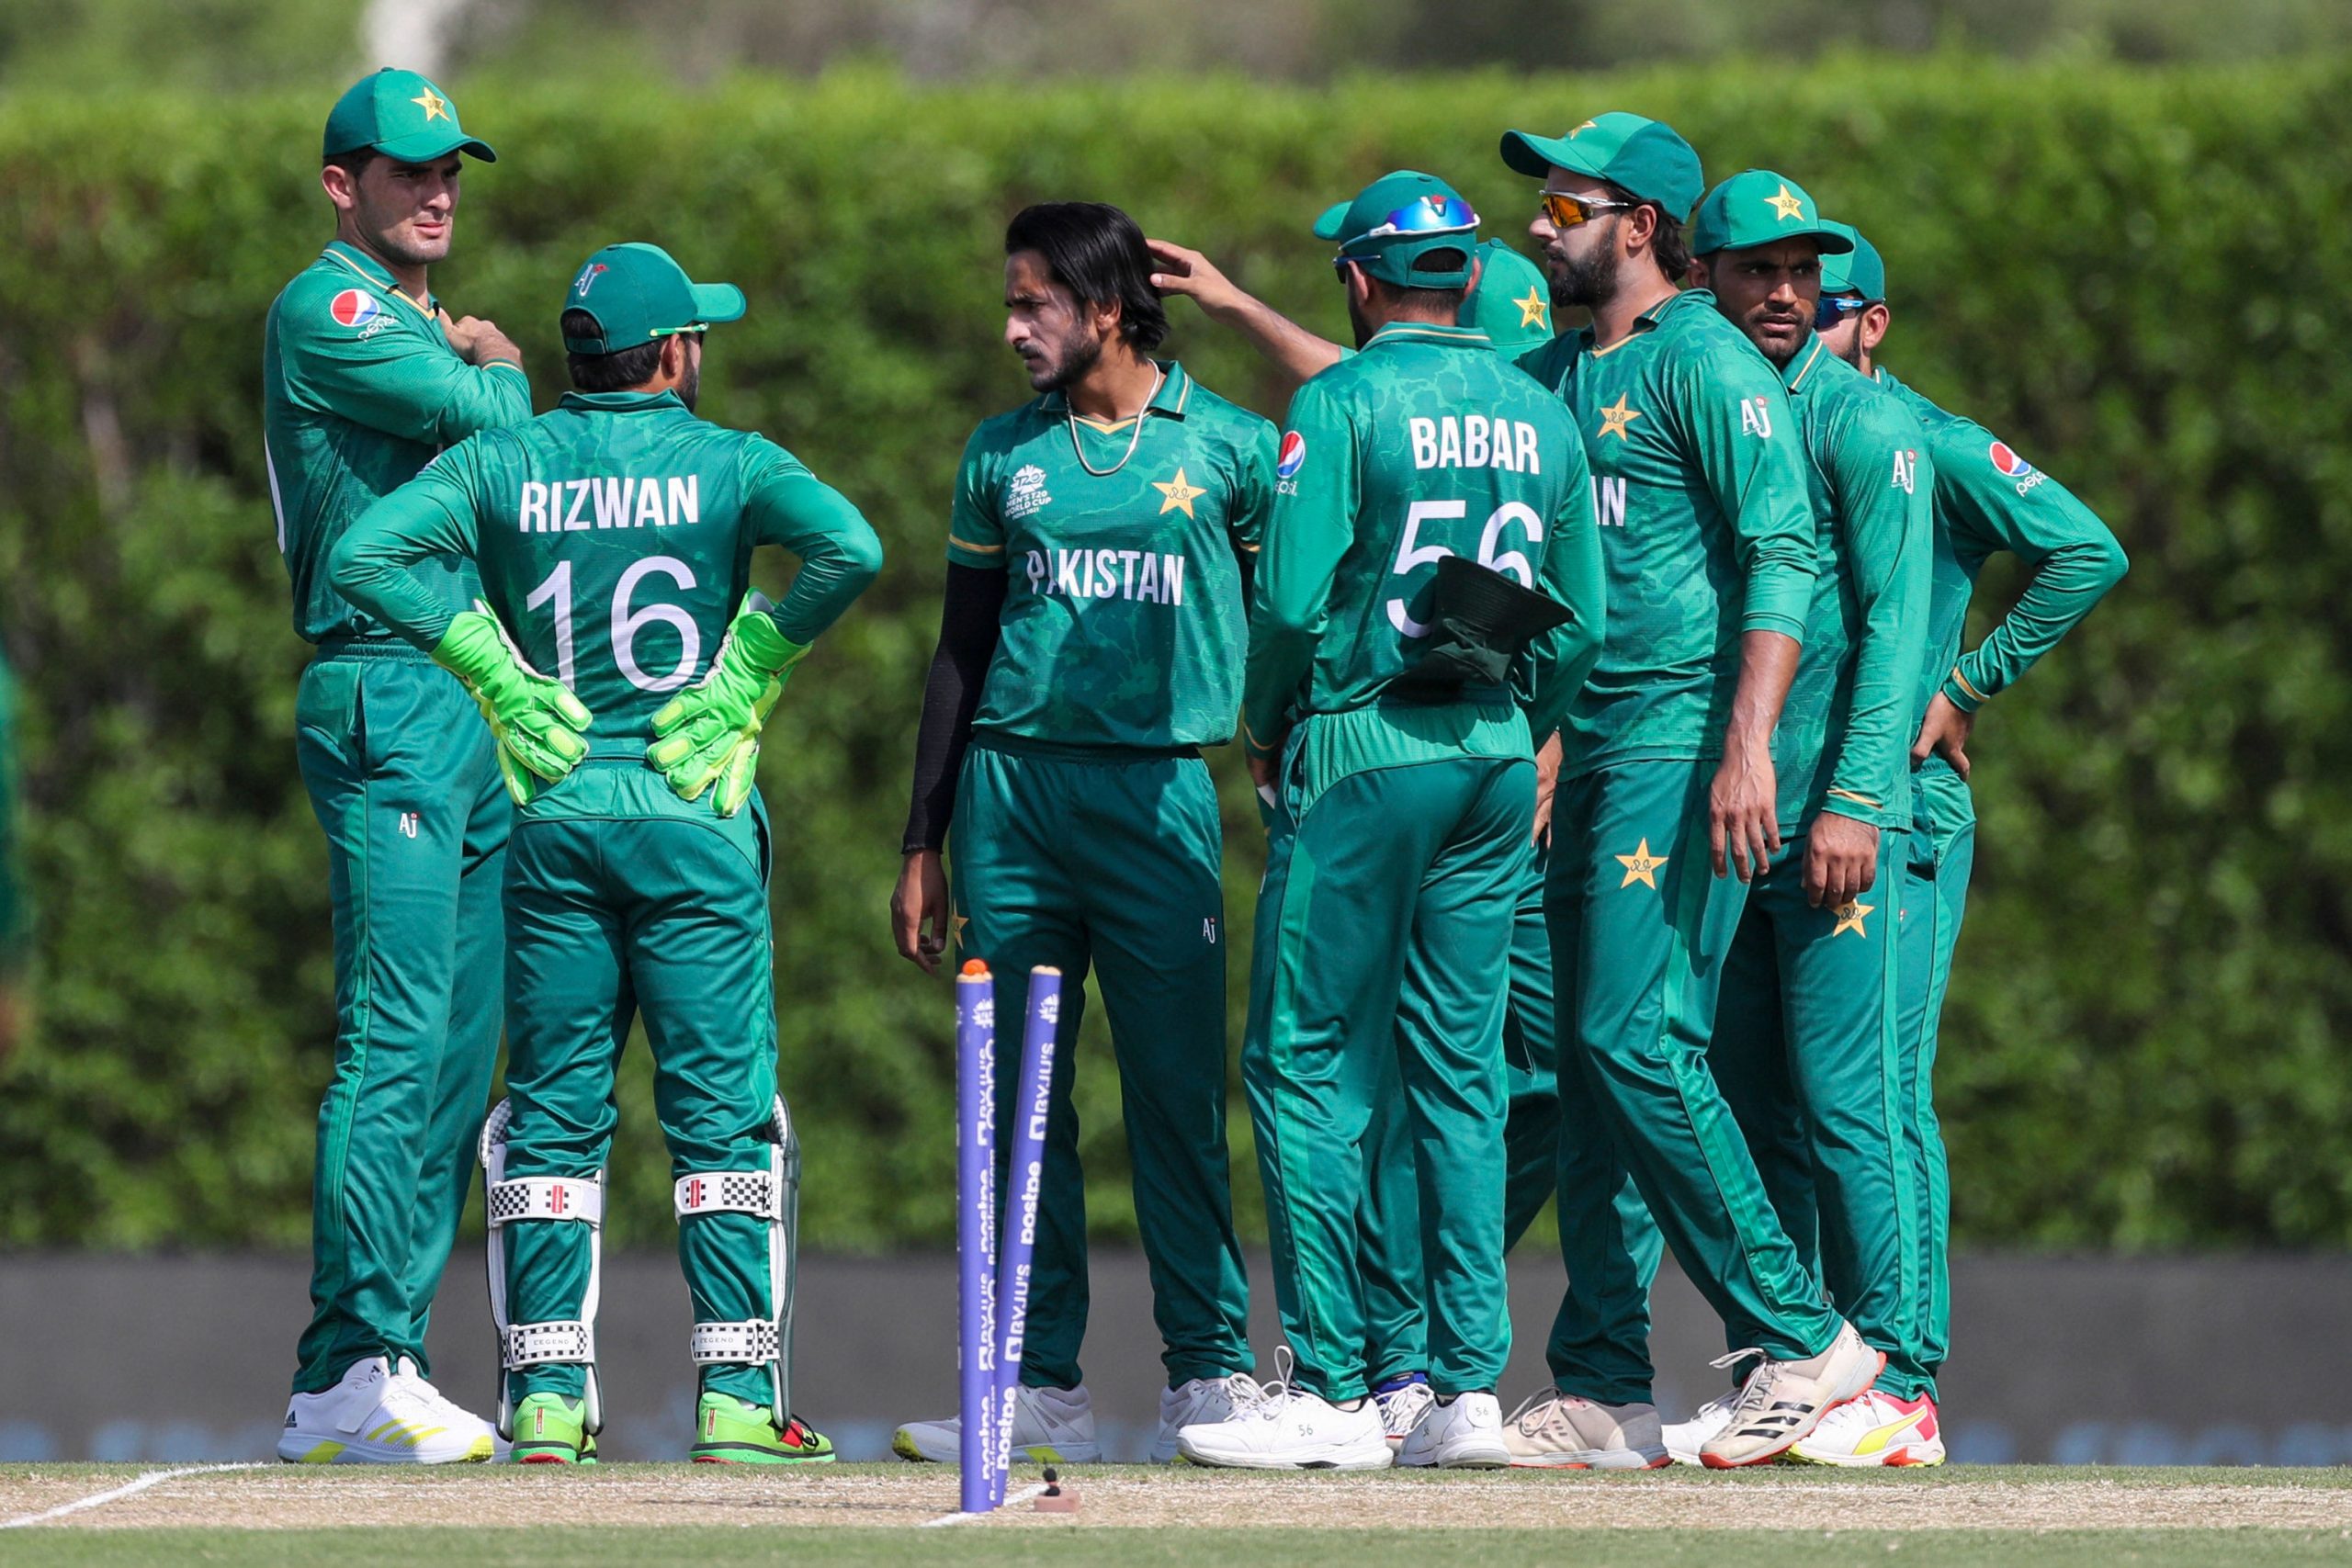 T20 WC: Can India handle Pakistan’s unbeaten record in Dubai in last 6 T20s?